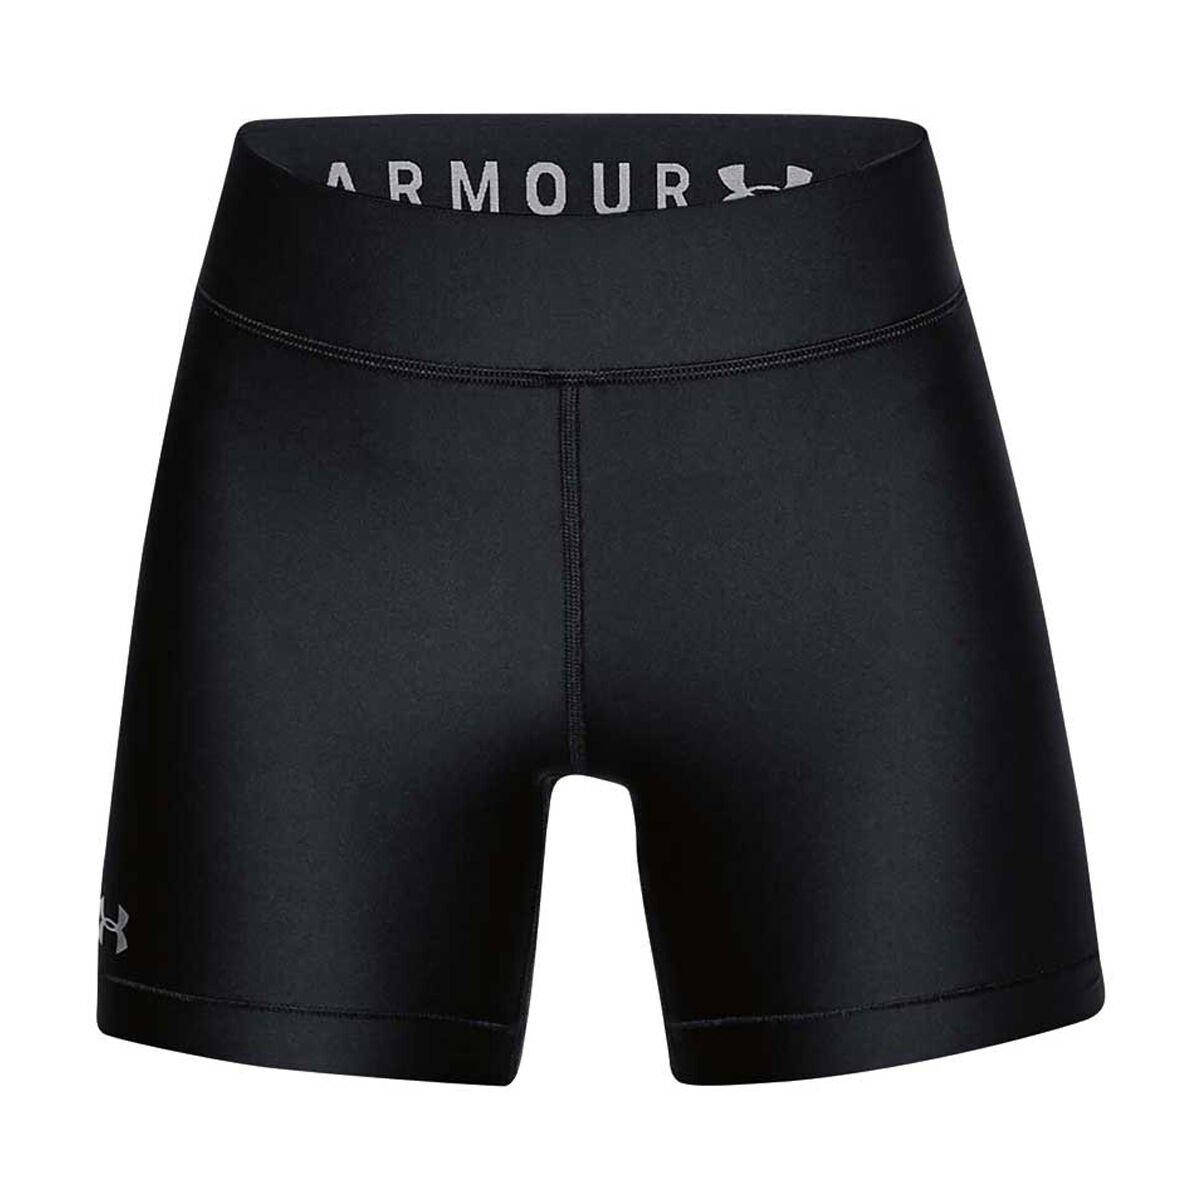 grey under armor shorts